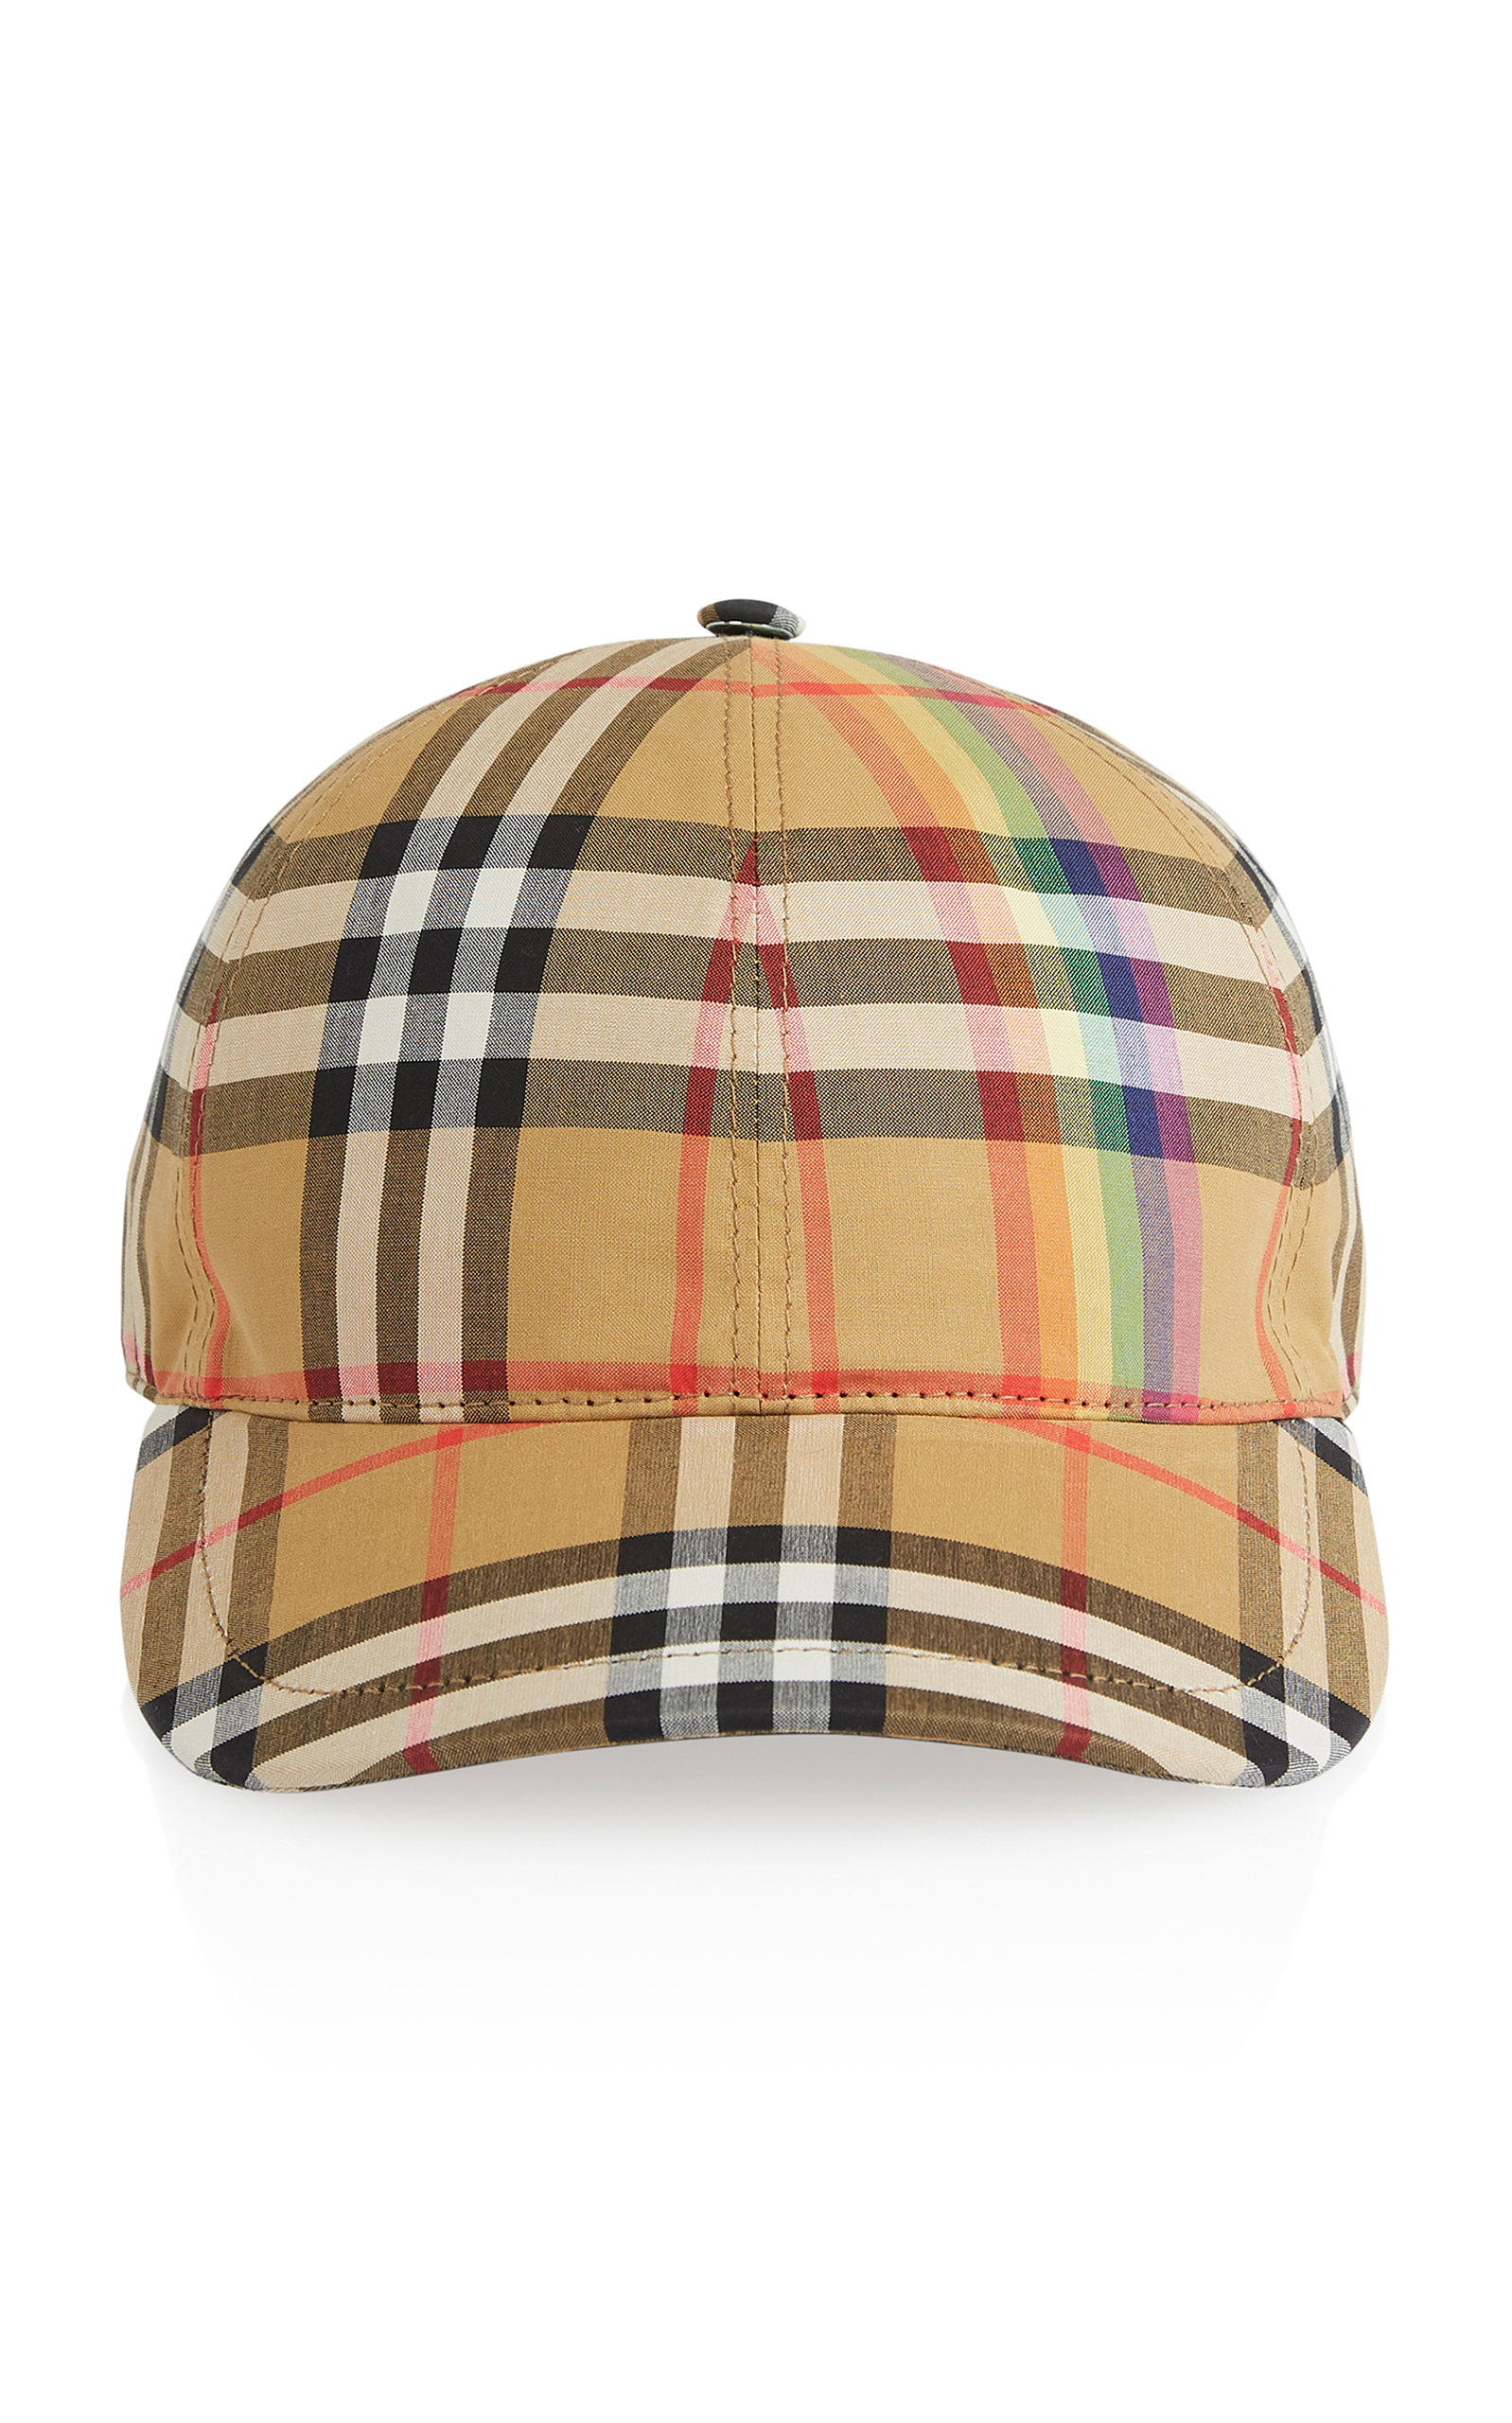 burberry rainbow bucket hat